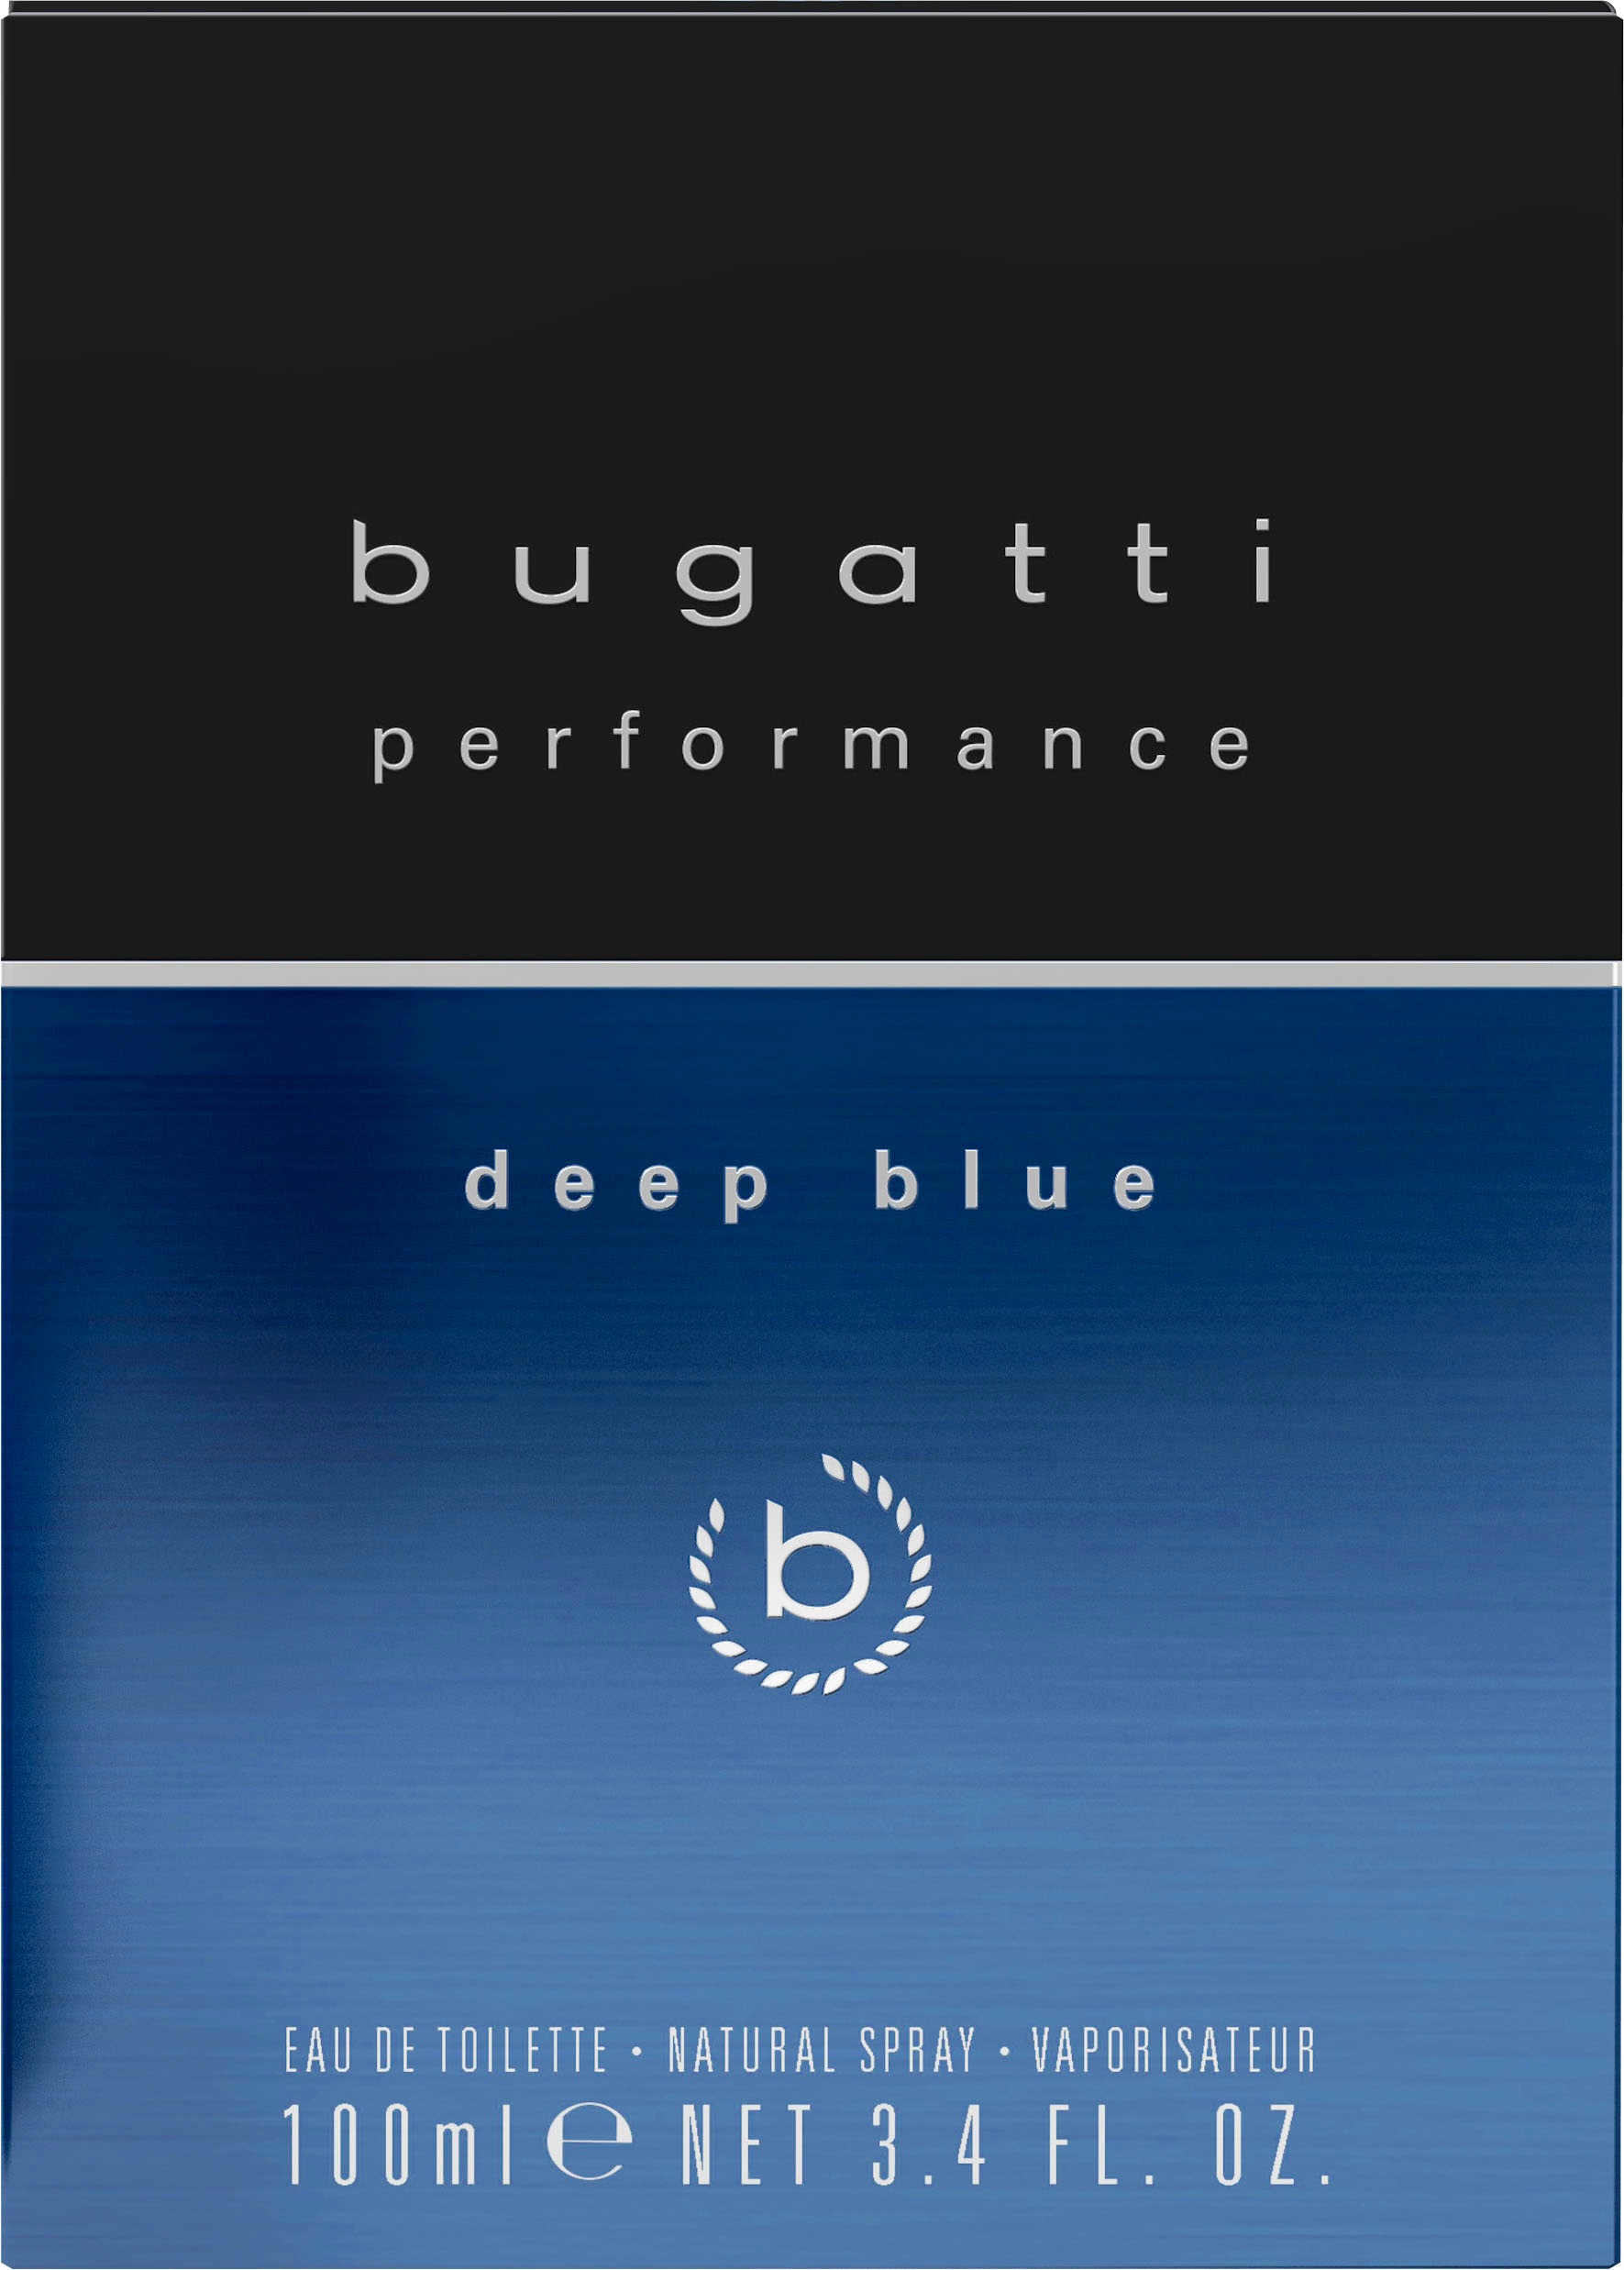 EdT Eau Performance Toilette OTTO Blue »BUGATTI bugatti Deep bestellen de bei 100ml«